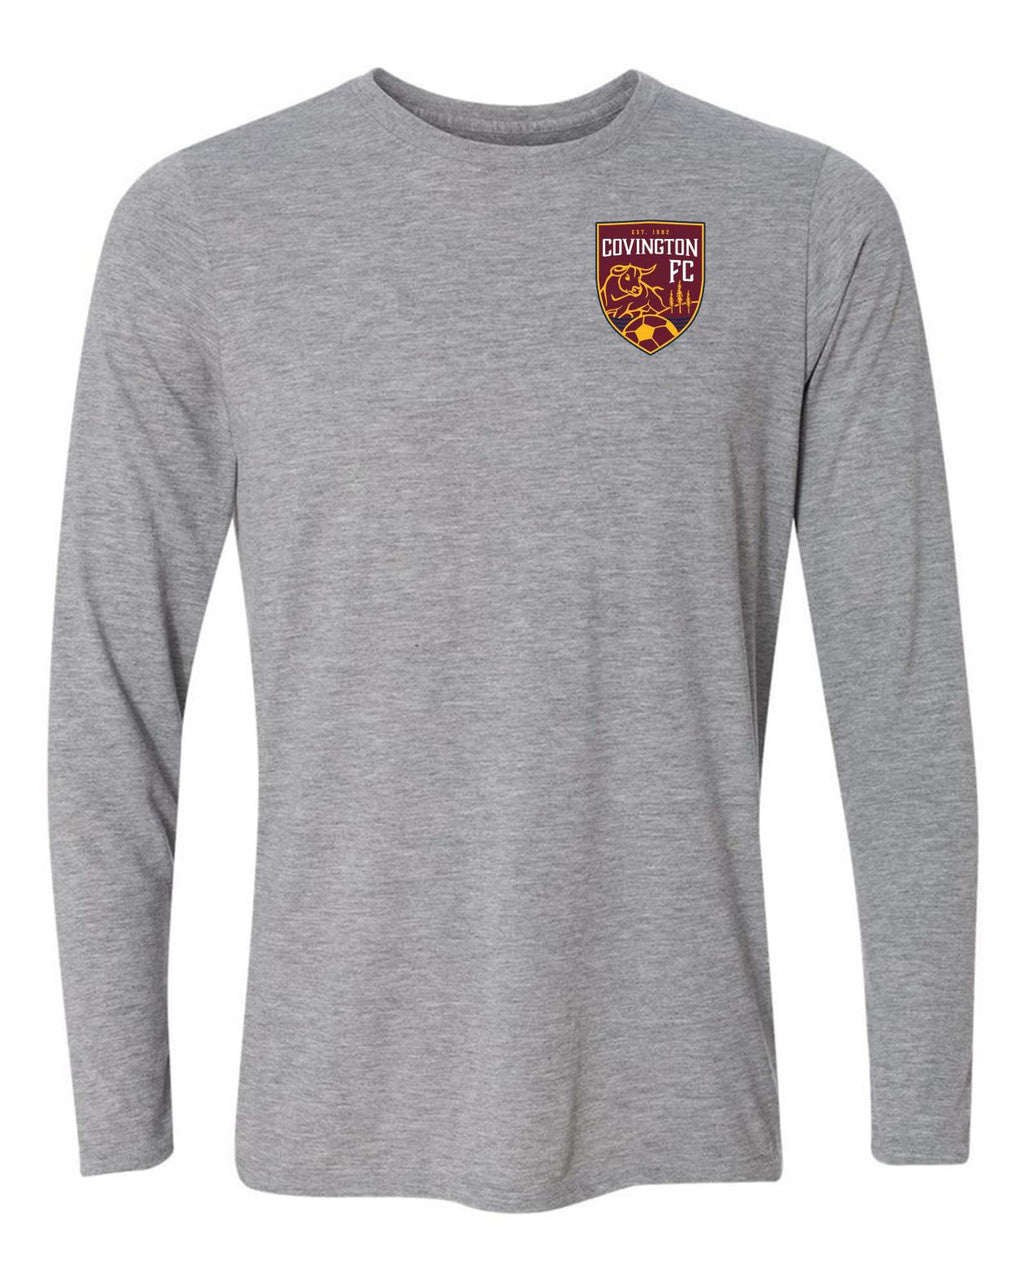 CYSA Long Sleeve Spirit T-Shirt - Navy or Grey CYSA Spiritwear NAVY MENS MEDIUM - Third Coast Soccer